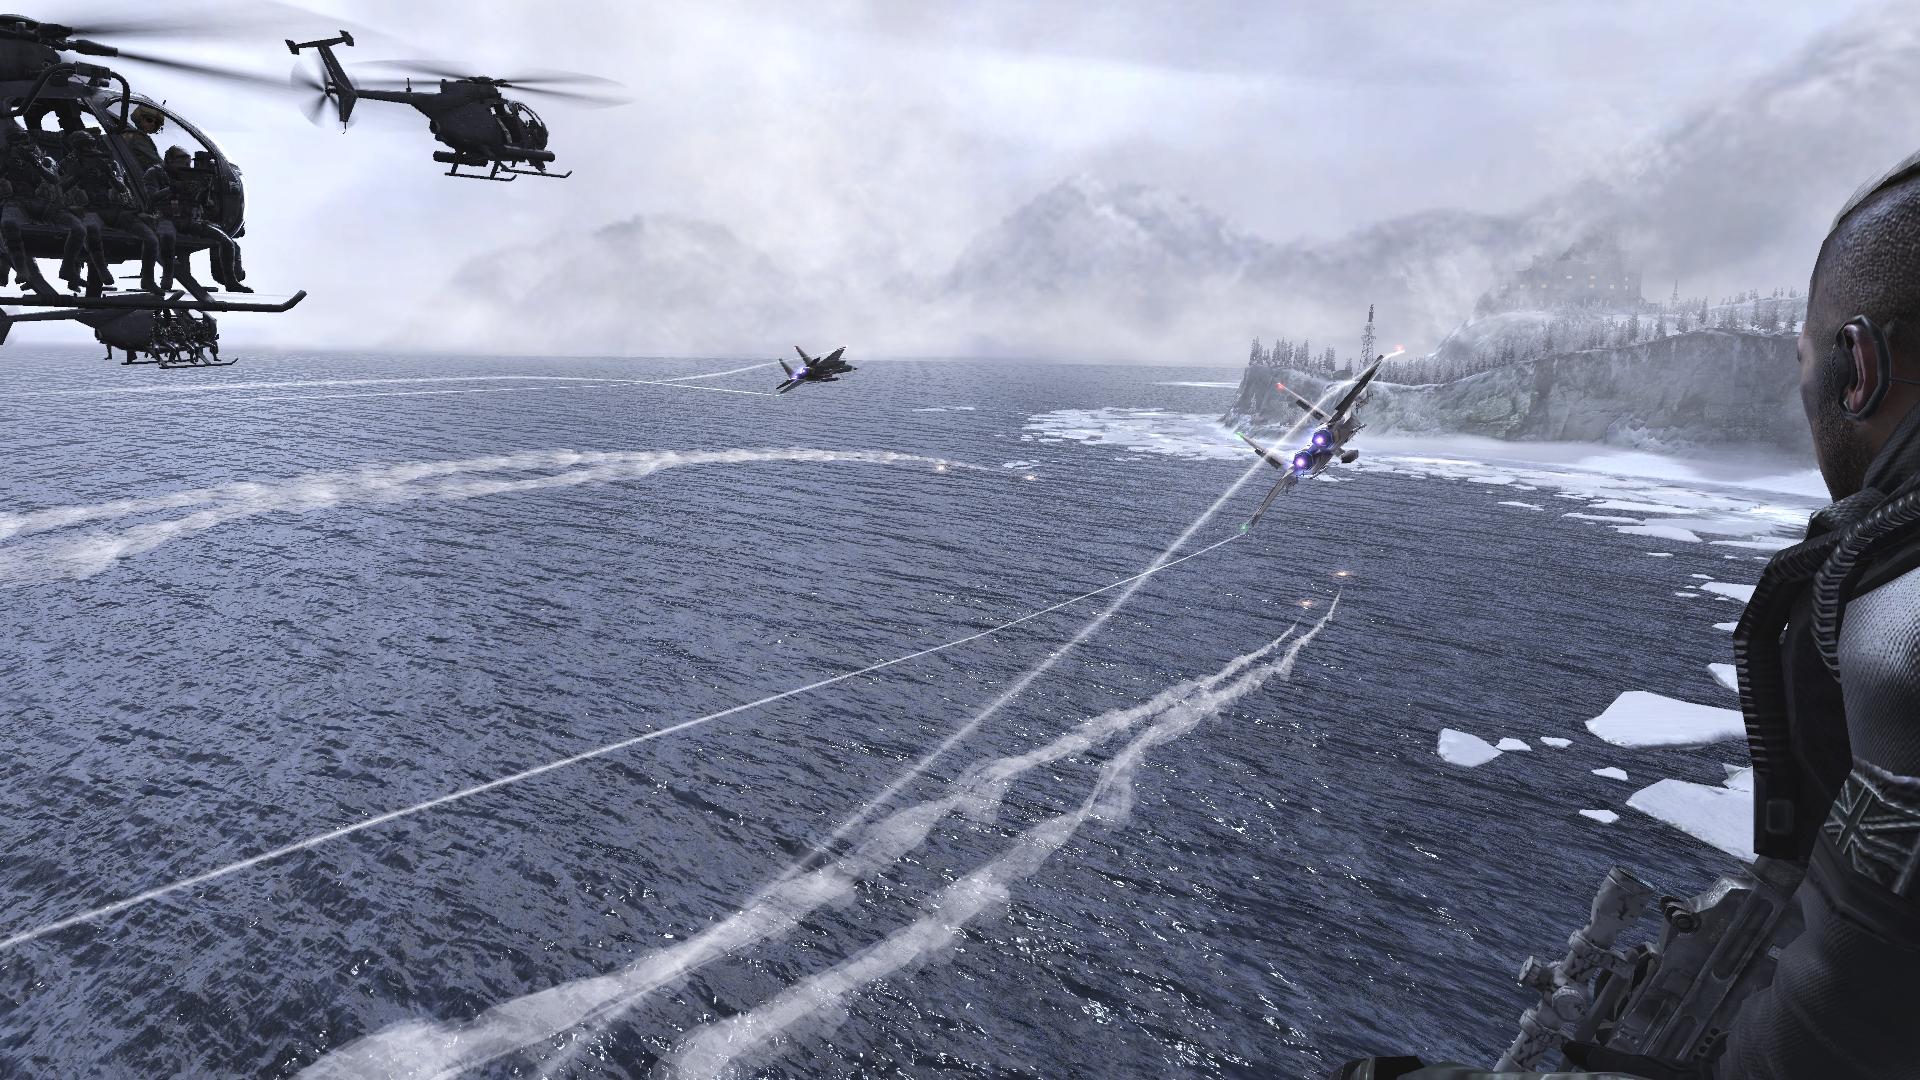 18 Modern Warfare 2 HD Wallpapers | Backgrounds - Wallpaper Abyss